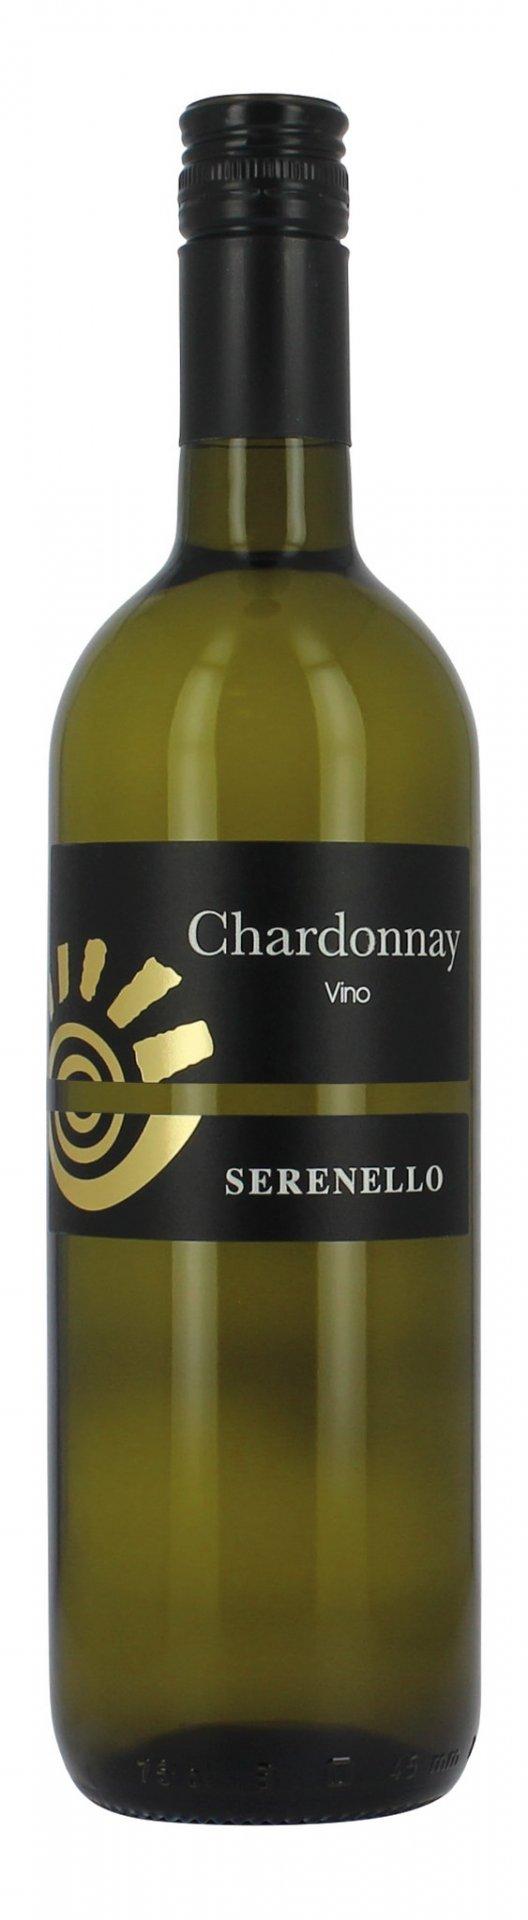 Serenello Chardonnay